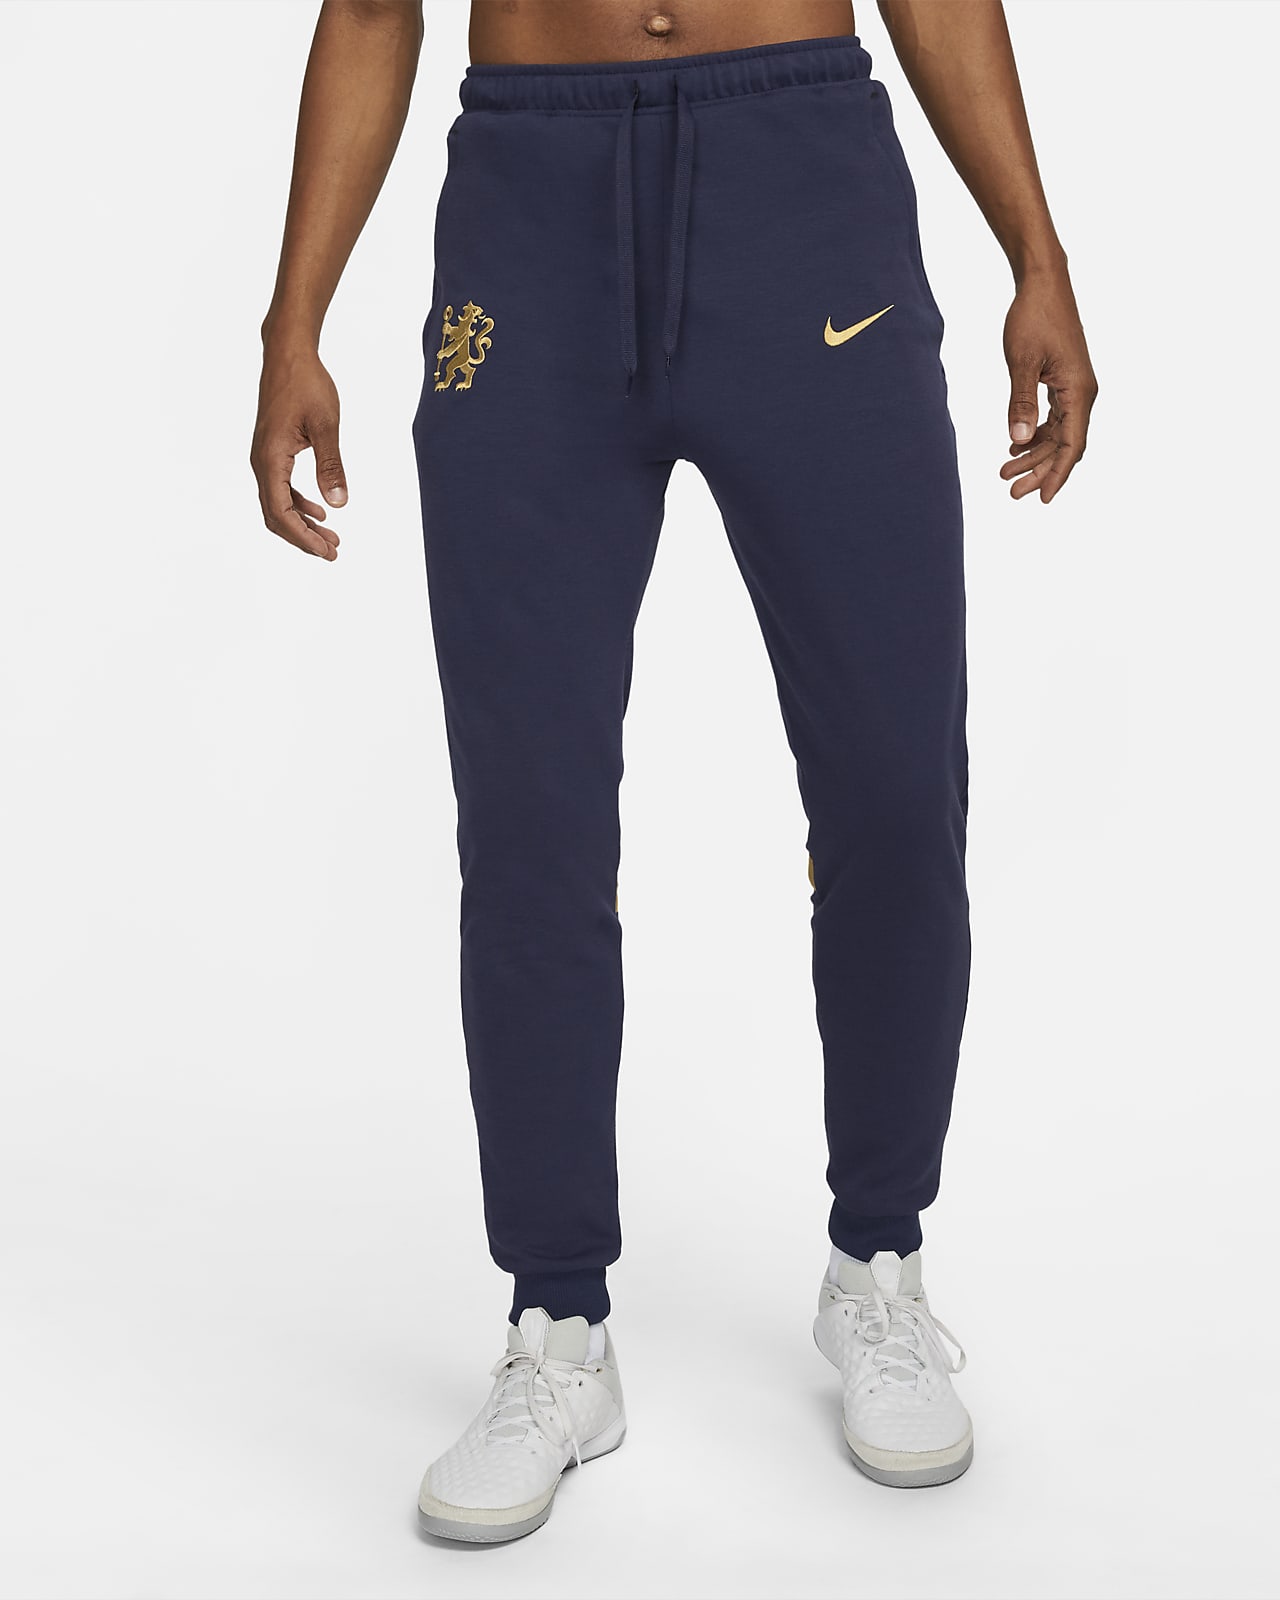 Adjuntar a Empresa cinturón Nike Dri-FIT Chelsea FC Pantalón de fútbol - Hombre. Nike ES